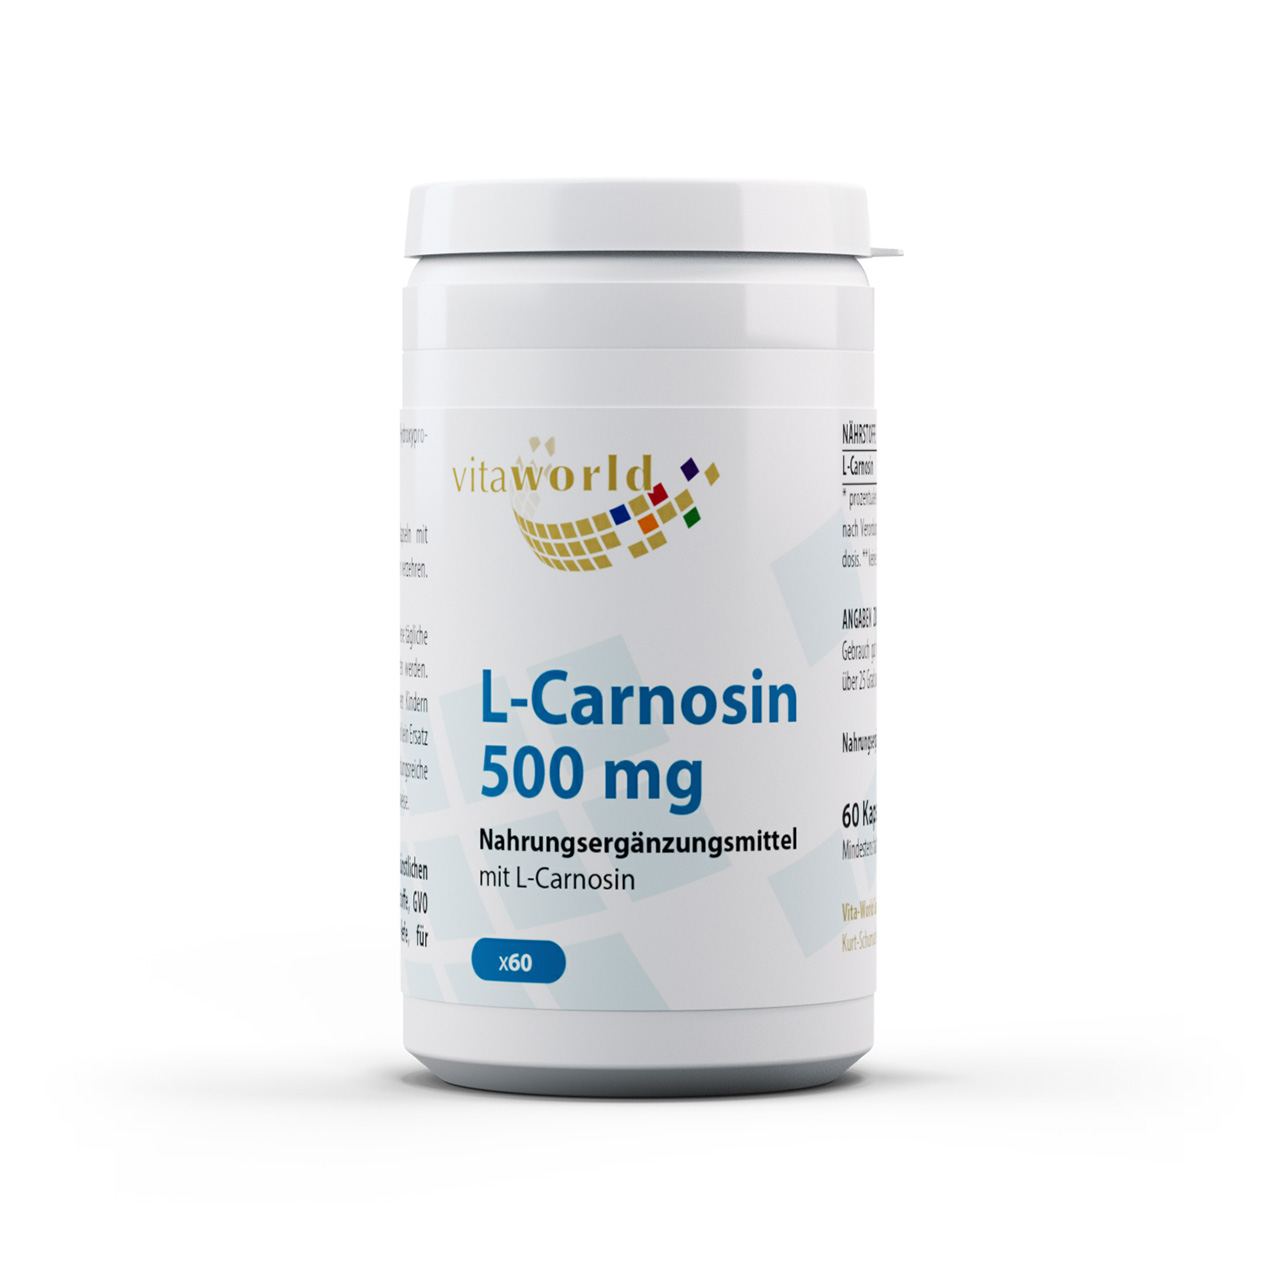 Vitaworld L-Carnosin 500 mg | 60 Kapseln | Apotheken Herstellung | vegan | gluten- und laktosefrei